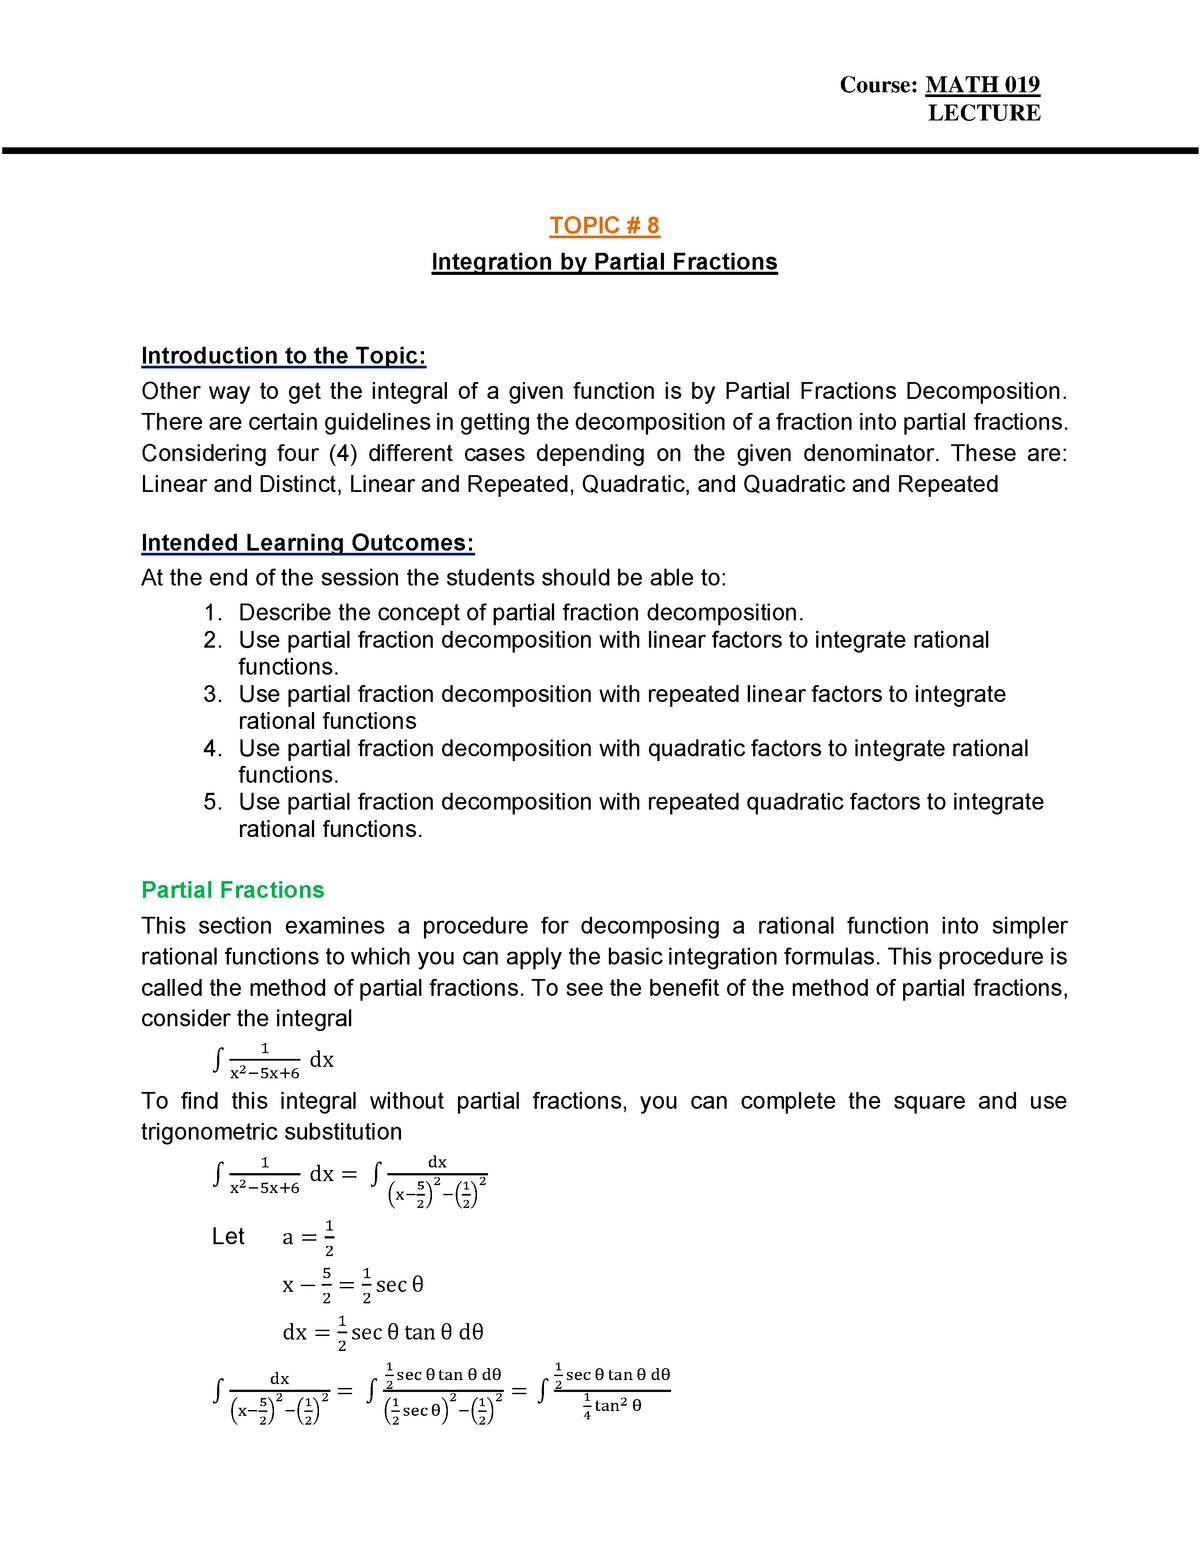 integration-by-partial-fraction-calculus-2-tip-studocu